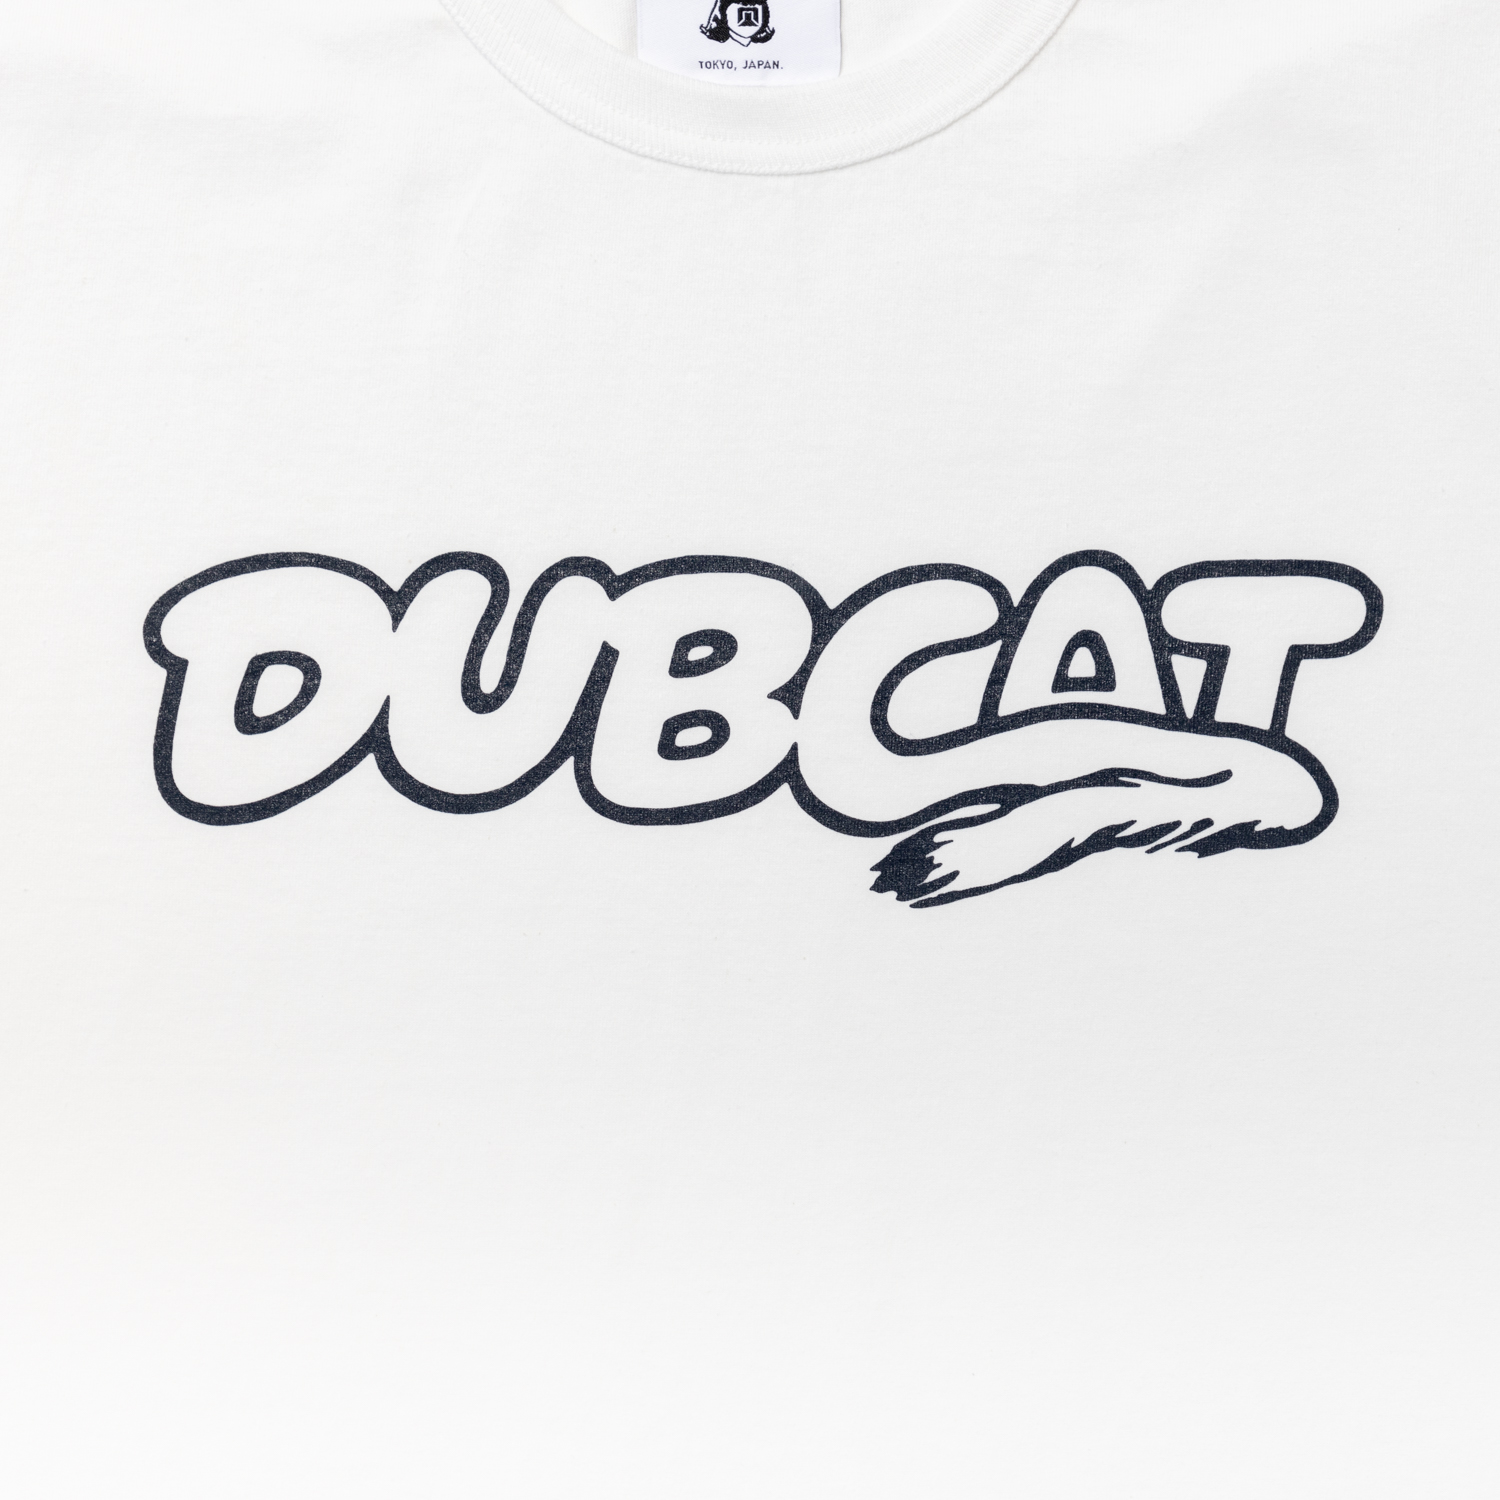 DUB CAT Tee designed by Hiroshi Iguchi